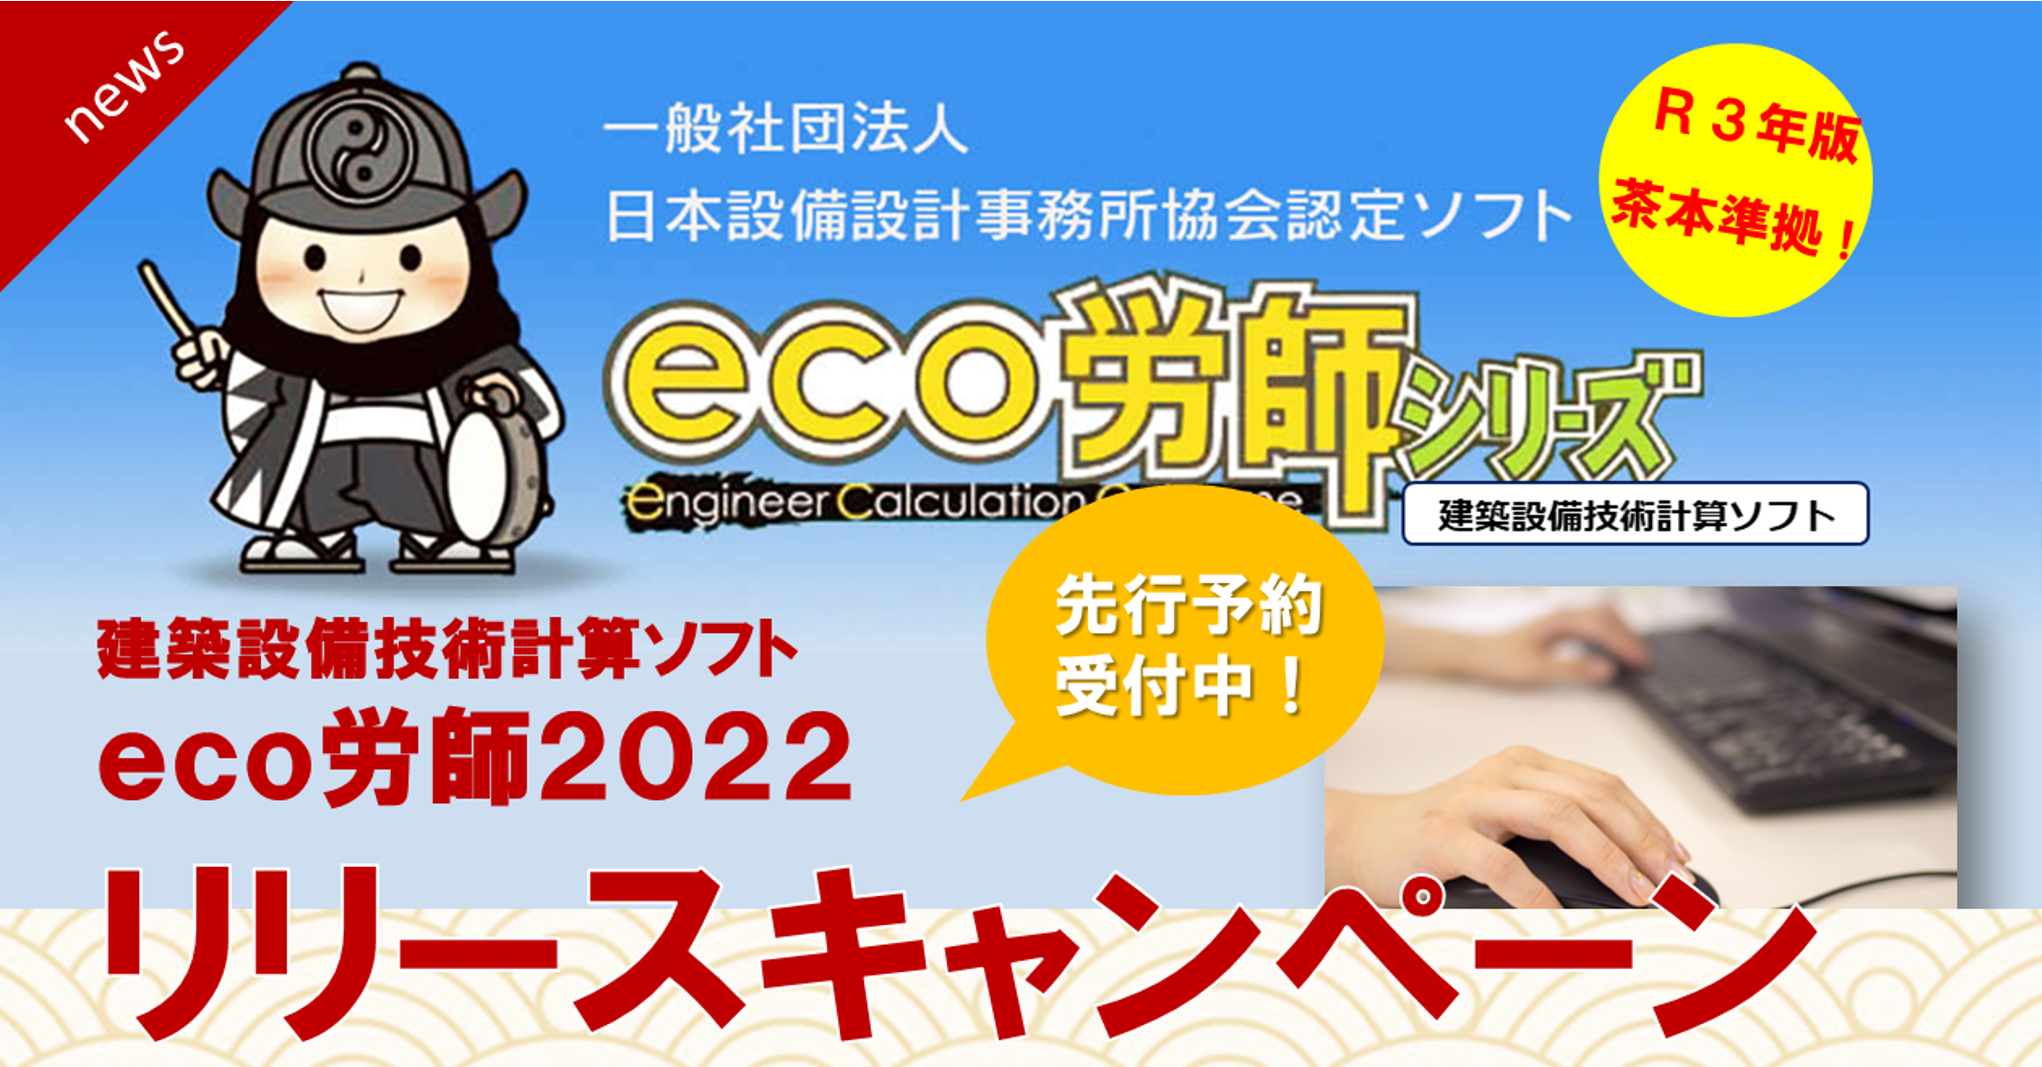 eco労師2022リリース キャンペーン価格のご案内 |製品詳細|株式会社